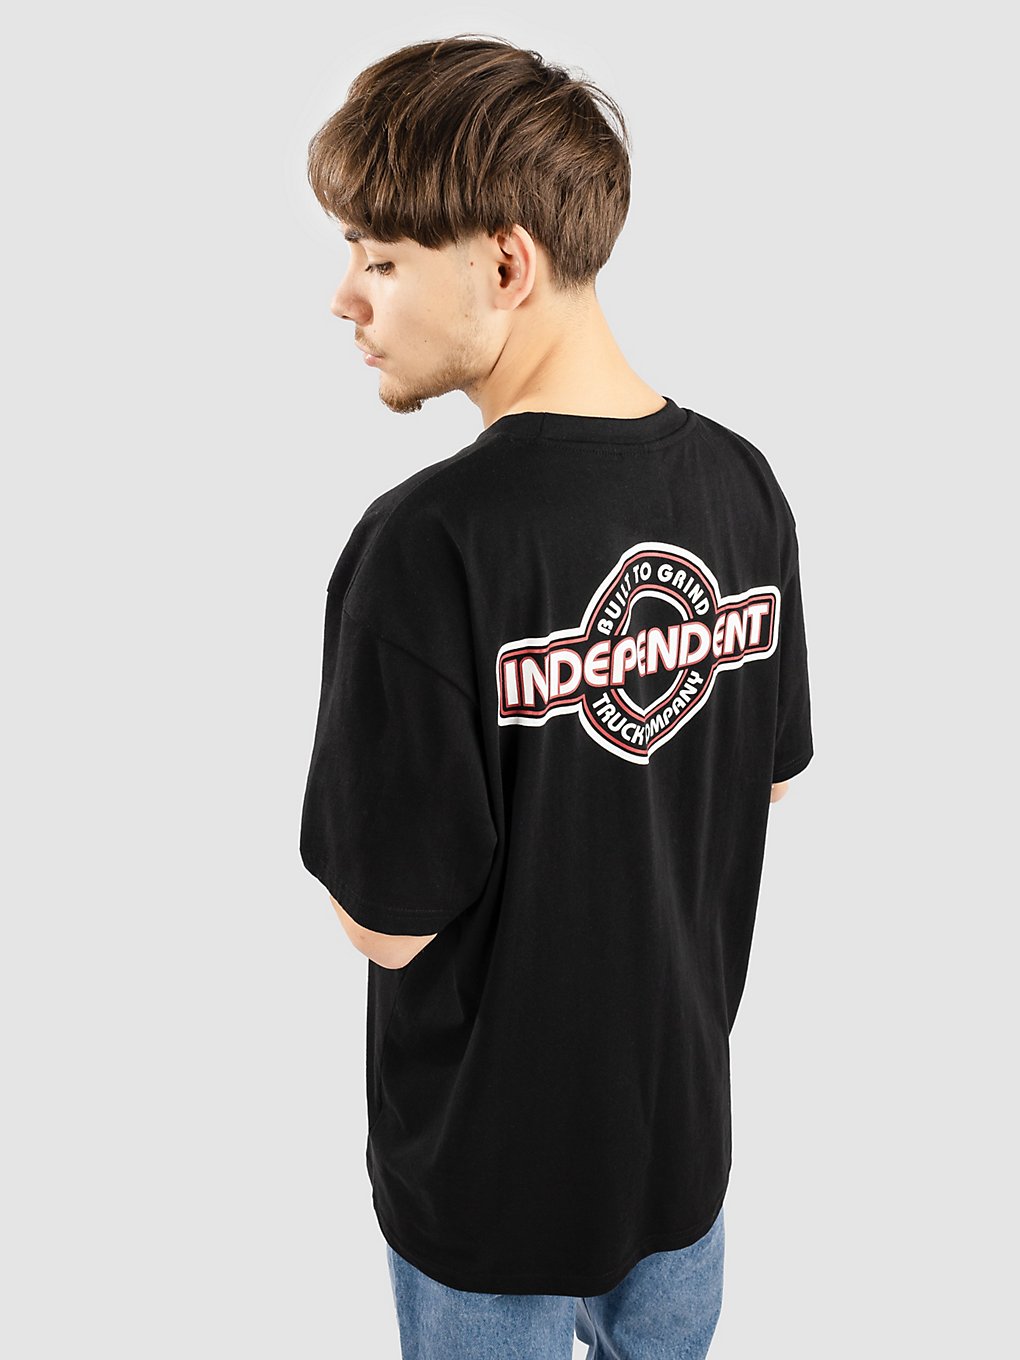 Independent BTG Bauhaus T-Shirt black kaufen